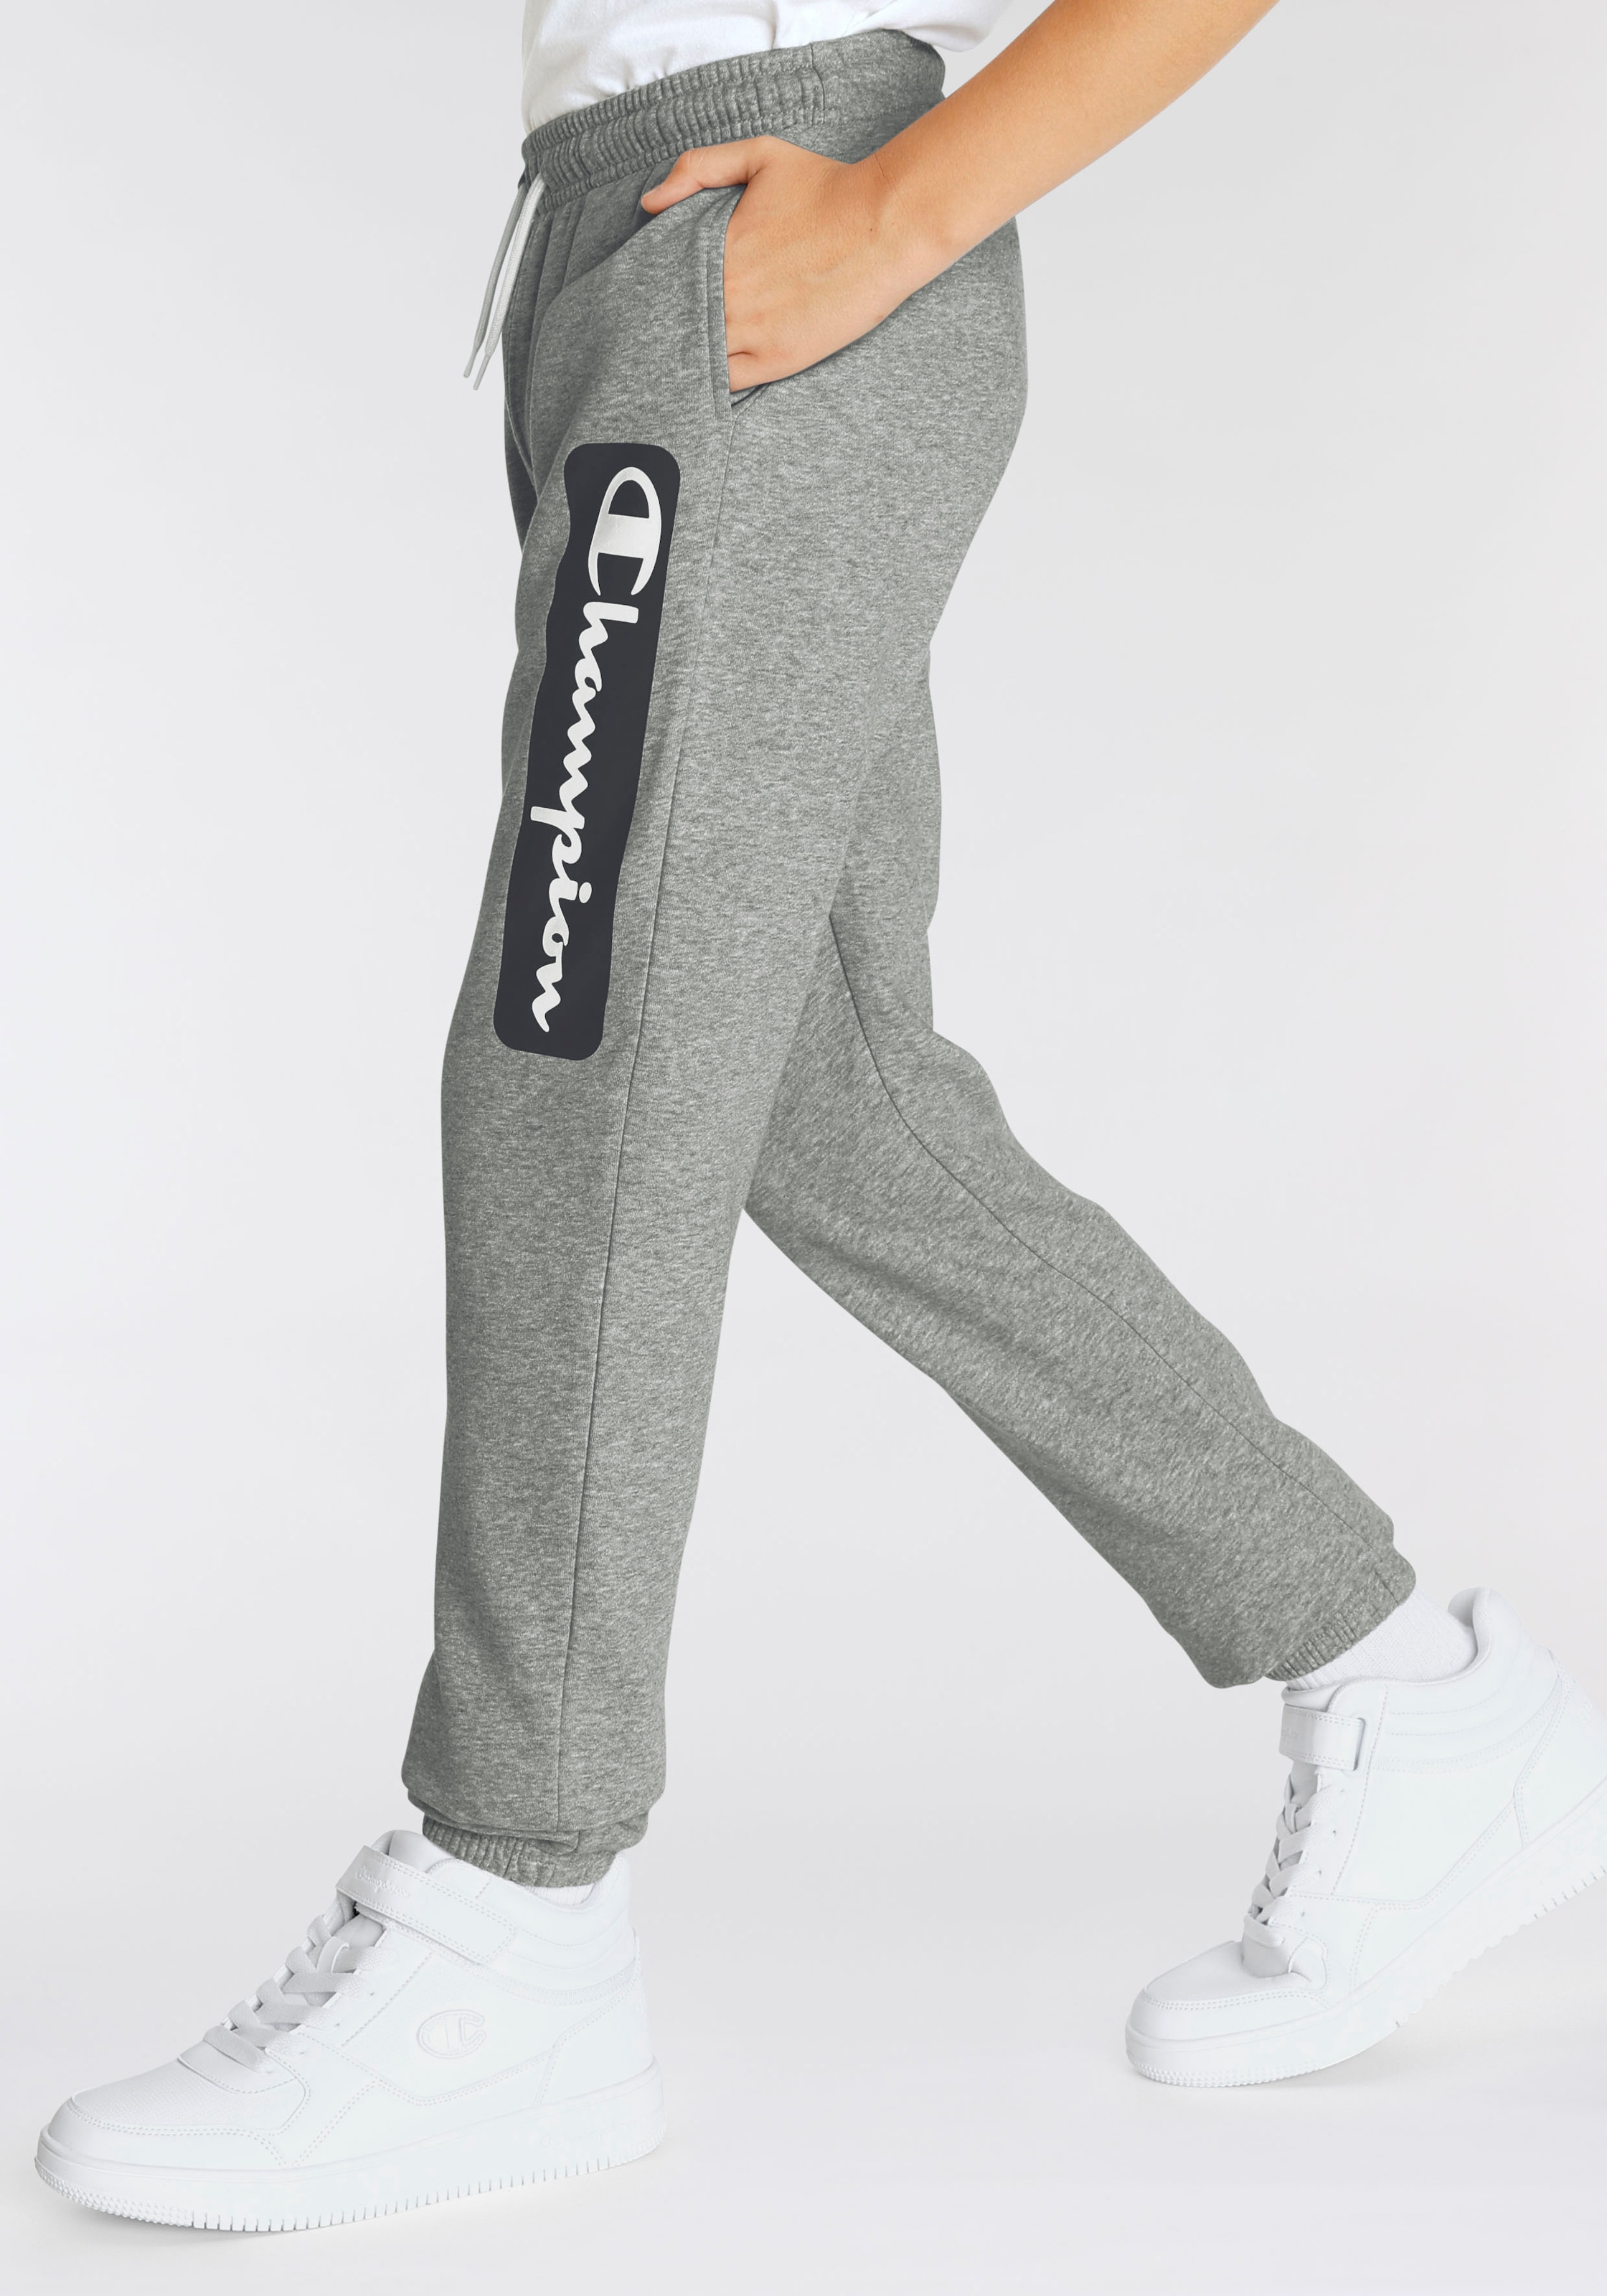 Pants für Champion BAUR Jogginghose Elastic | Shop »Graphic Cuff auf - Raten Kinder«